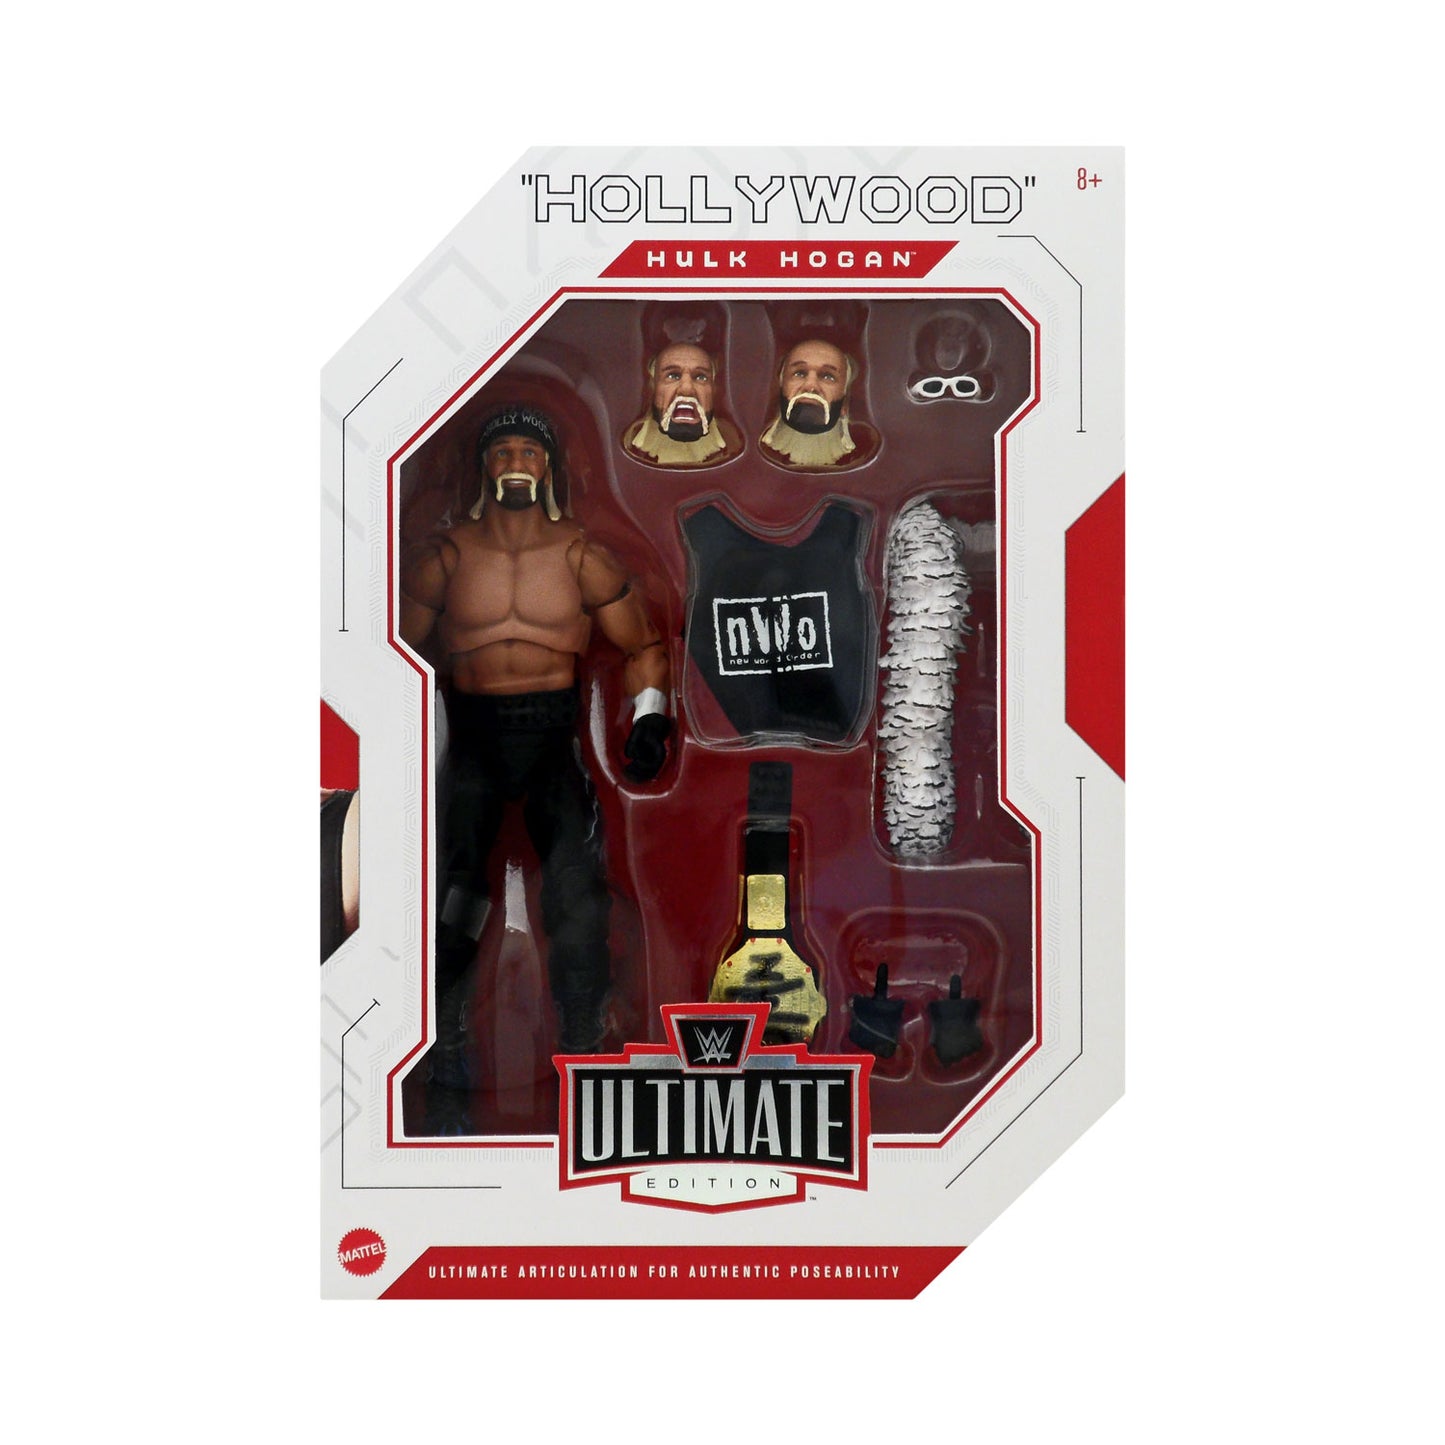 WWE Ultimate Edition Wave 7 "Hollywood" Hulk Hogan Action Figure